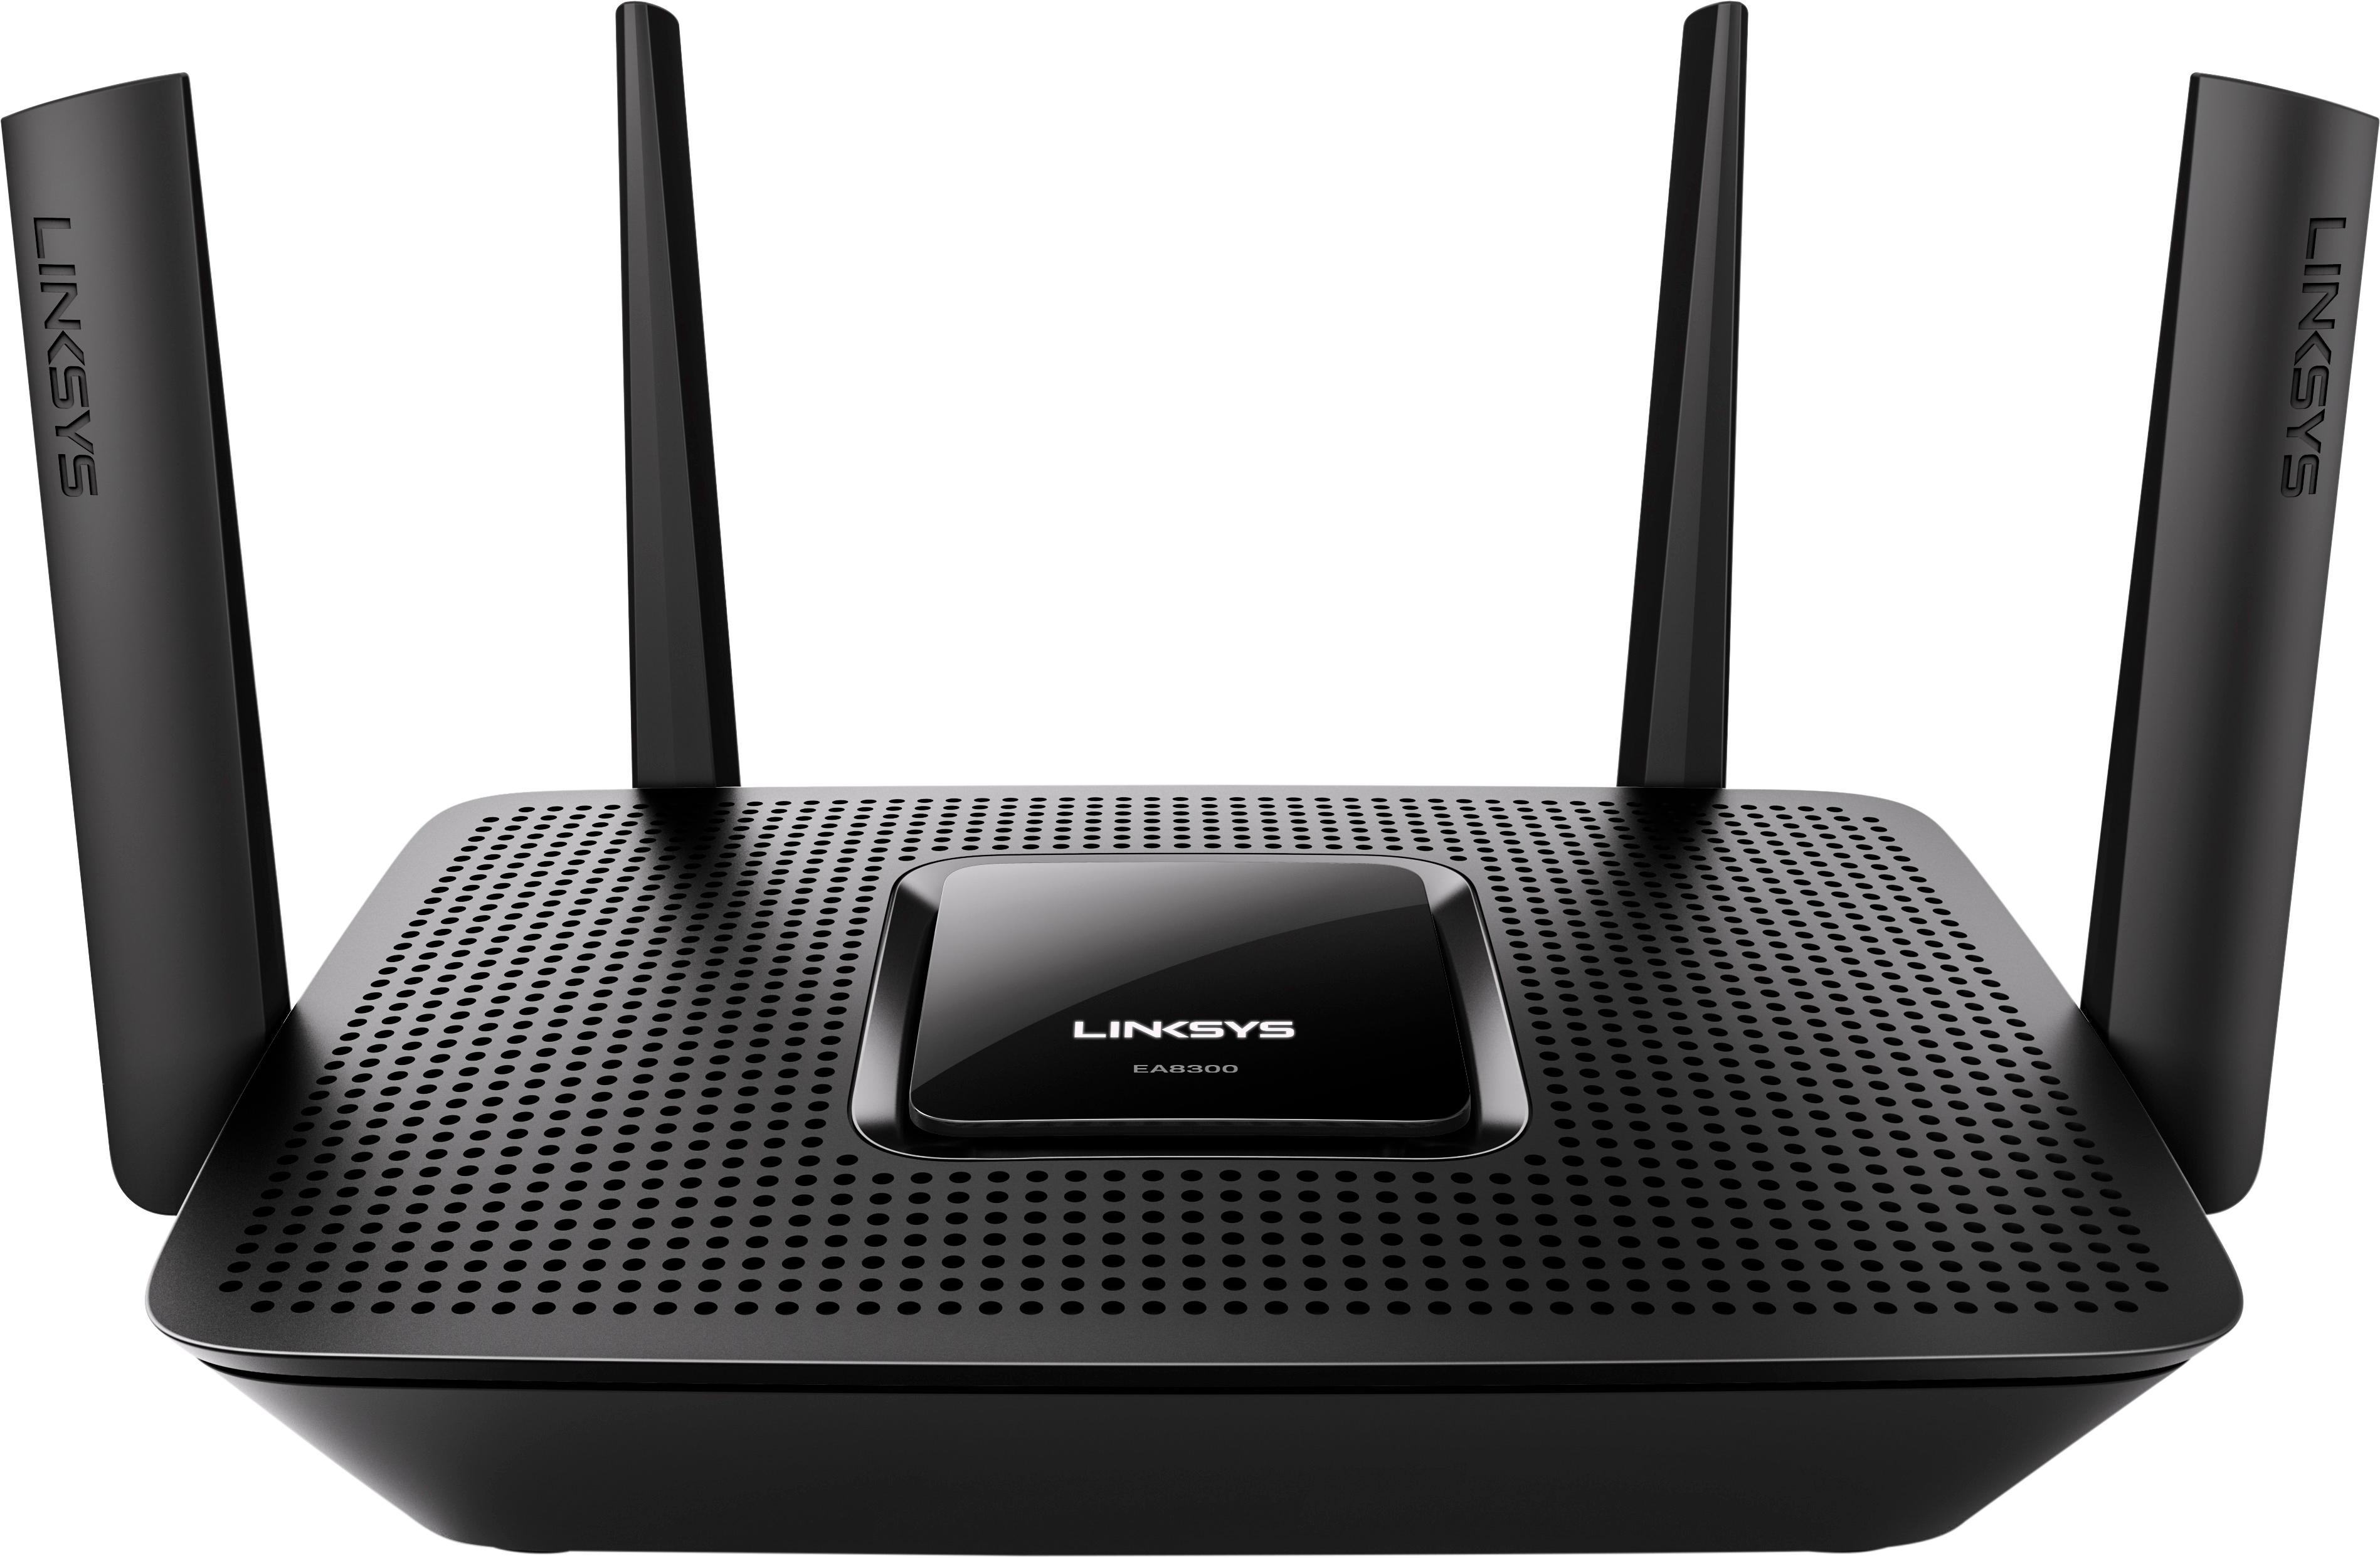 Linksys - Max-Stream™ AC2200 Tri-Band Wi-Fi Router - Black